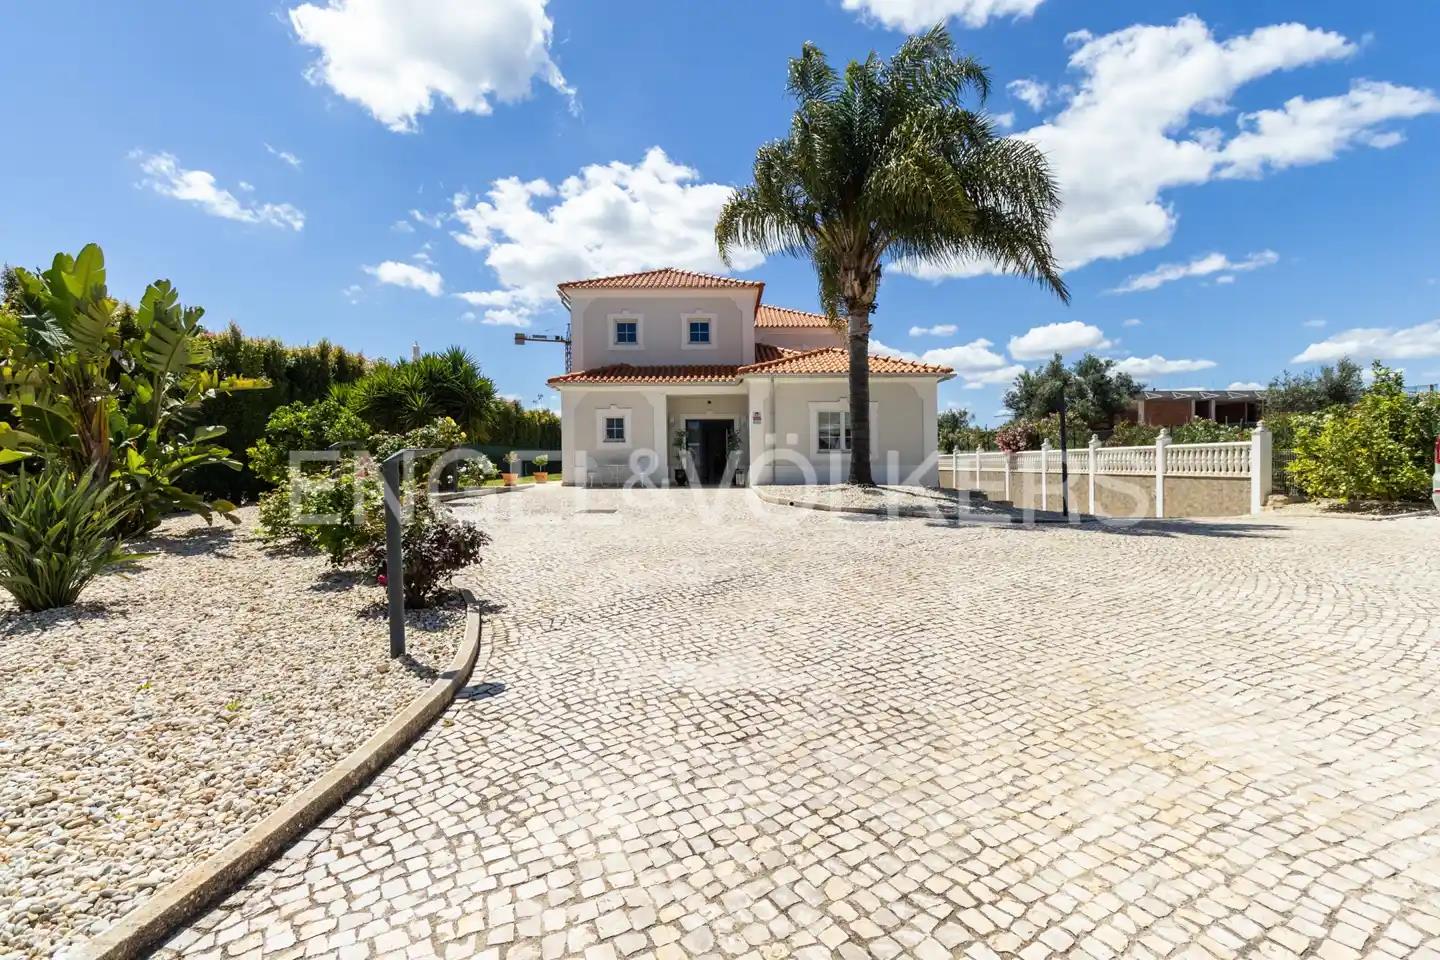 Magnificent detached villa in the prestigious area of Quintinhas in Vilamoura